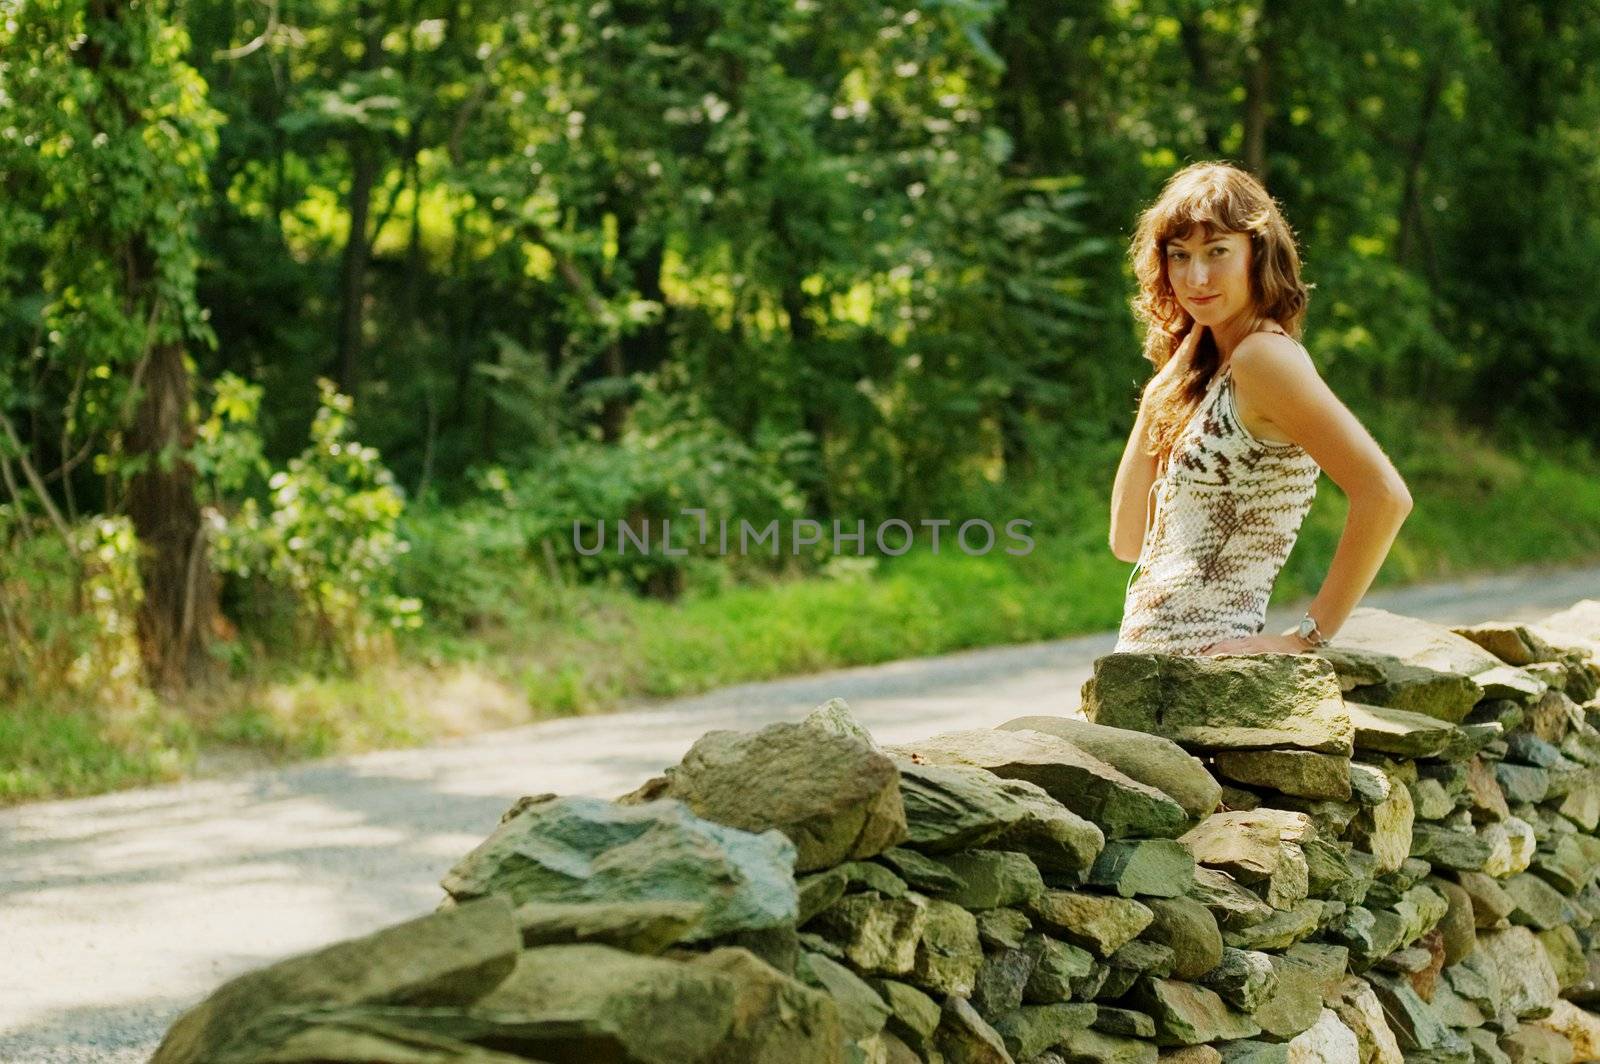 Pretty Girl Next to Stone Fence by cardmaverick